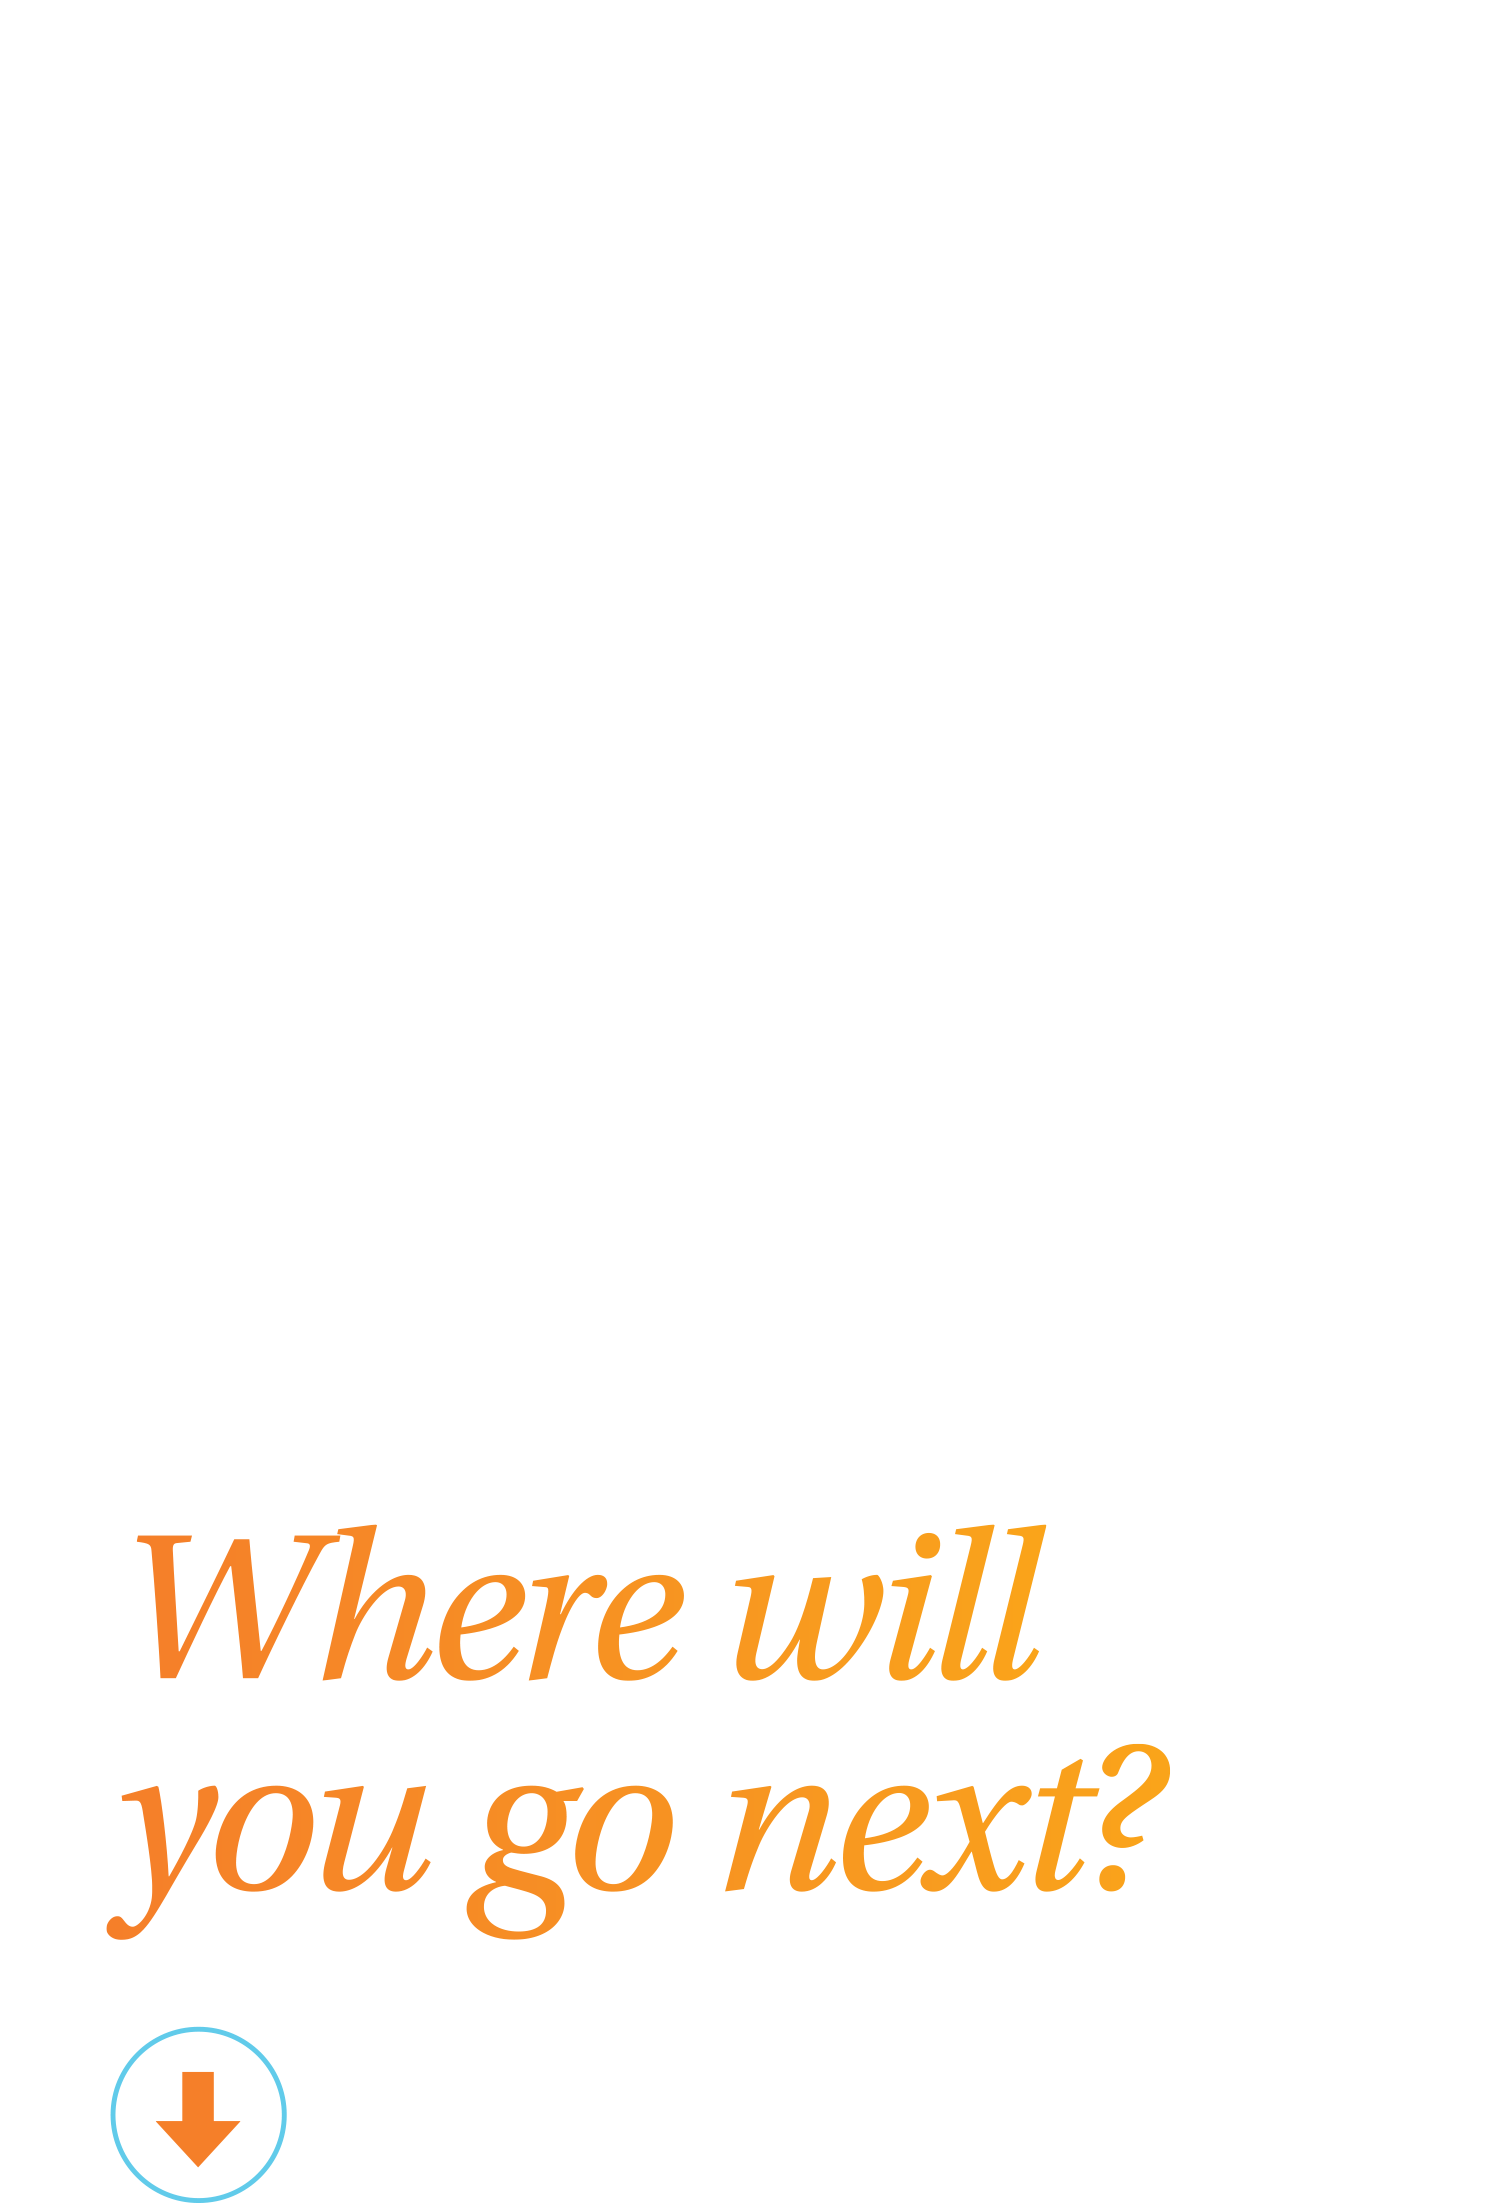 Where will you go next?